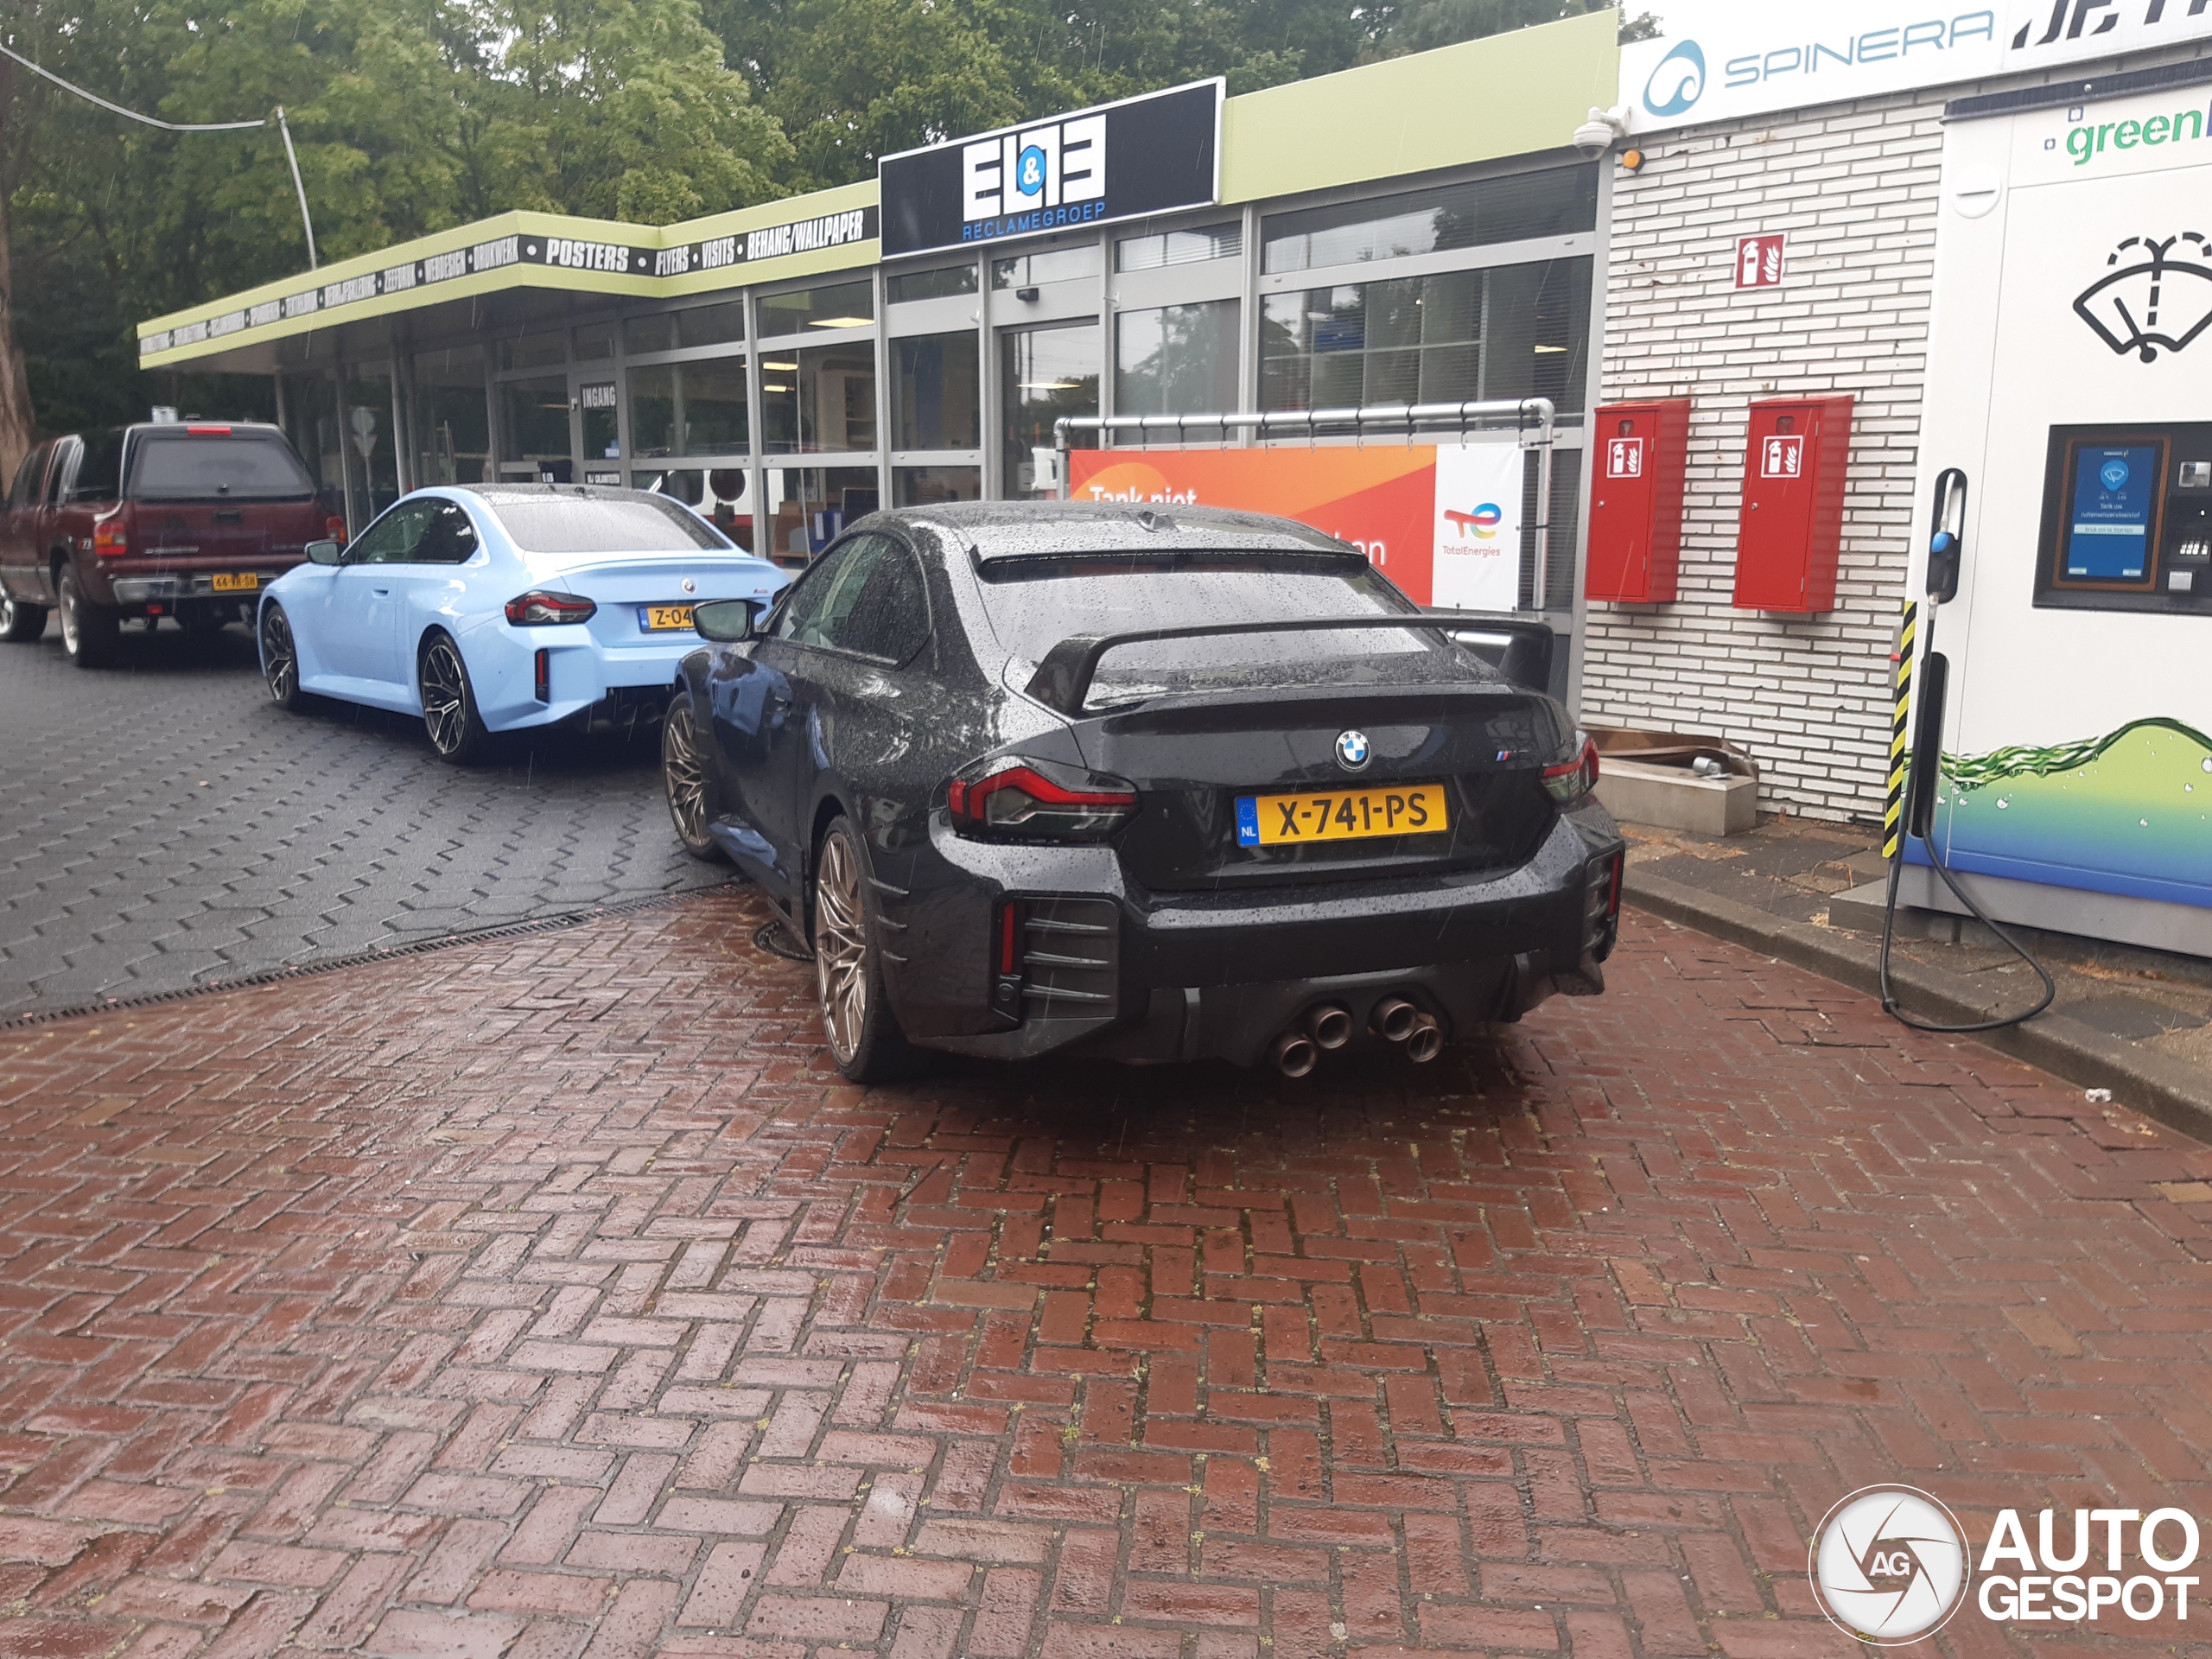 Vers BMW M2 tweetal in Warmond